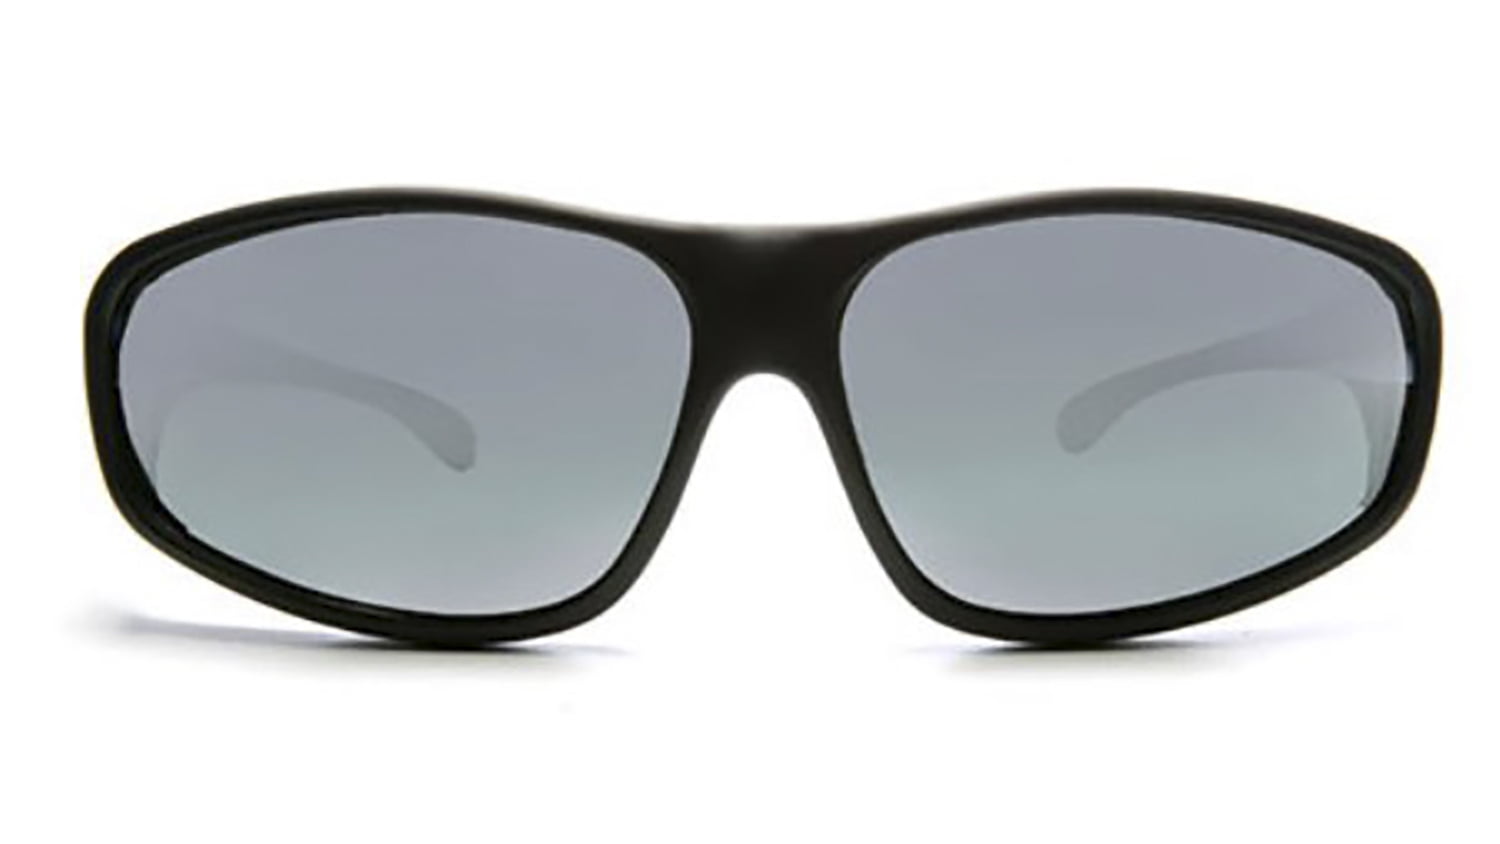 Solar Shield Fits Over Sunglasses Black Black Polarized Lens 2301A 